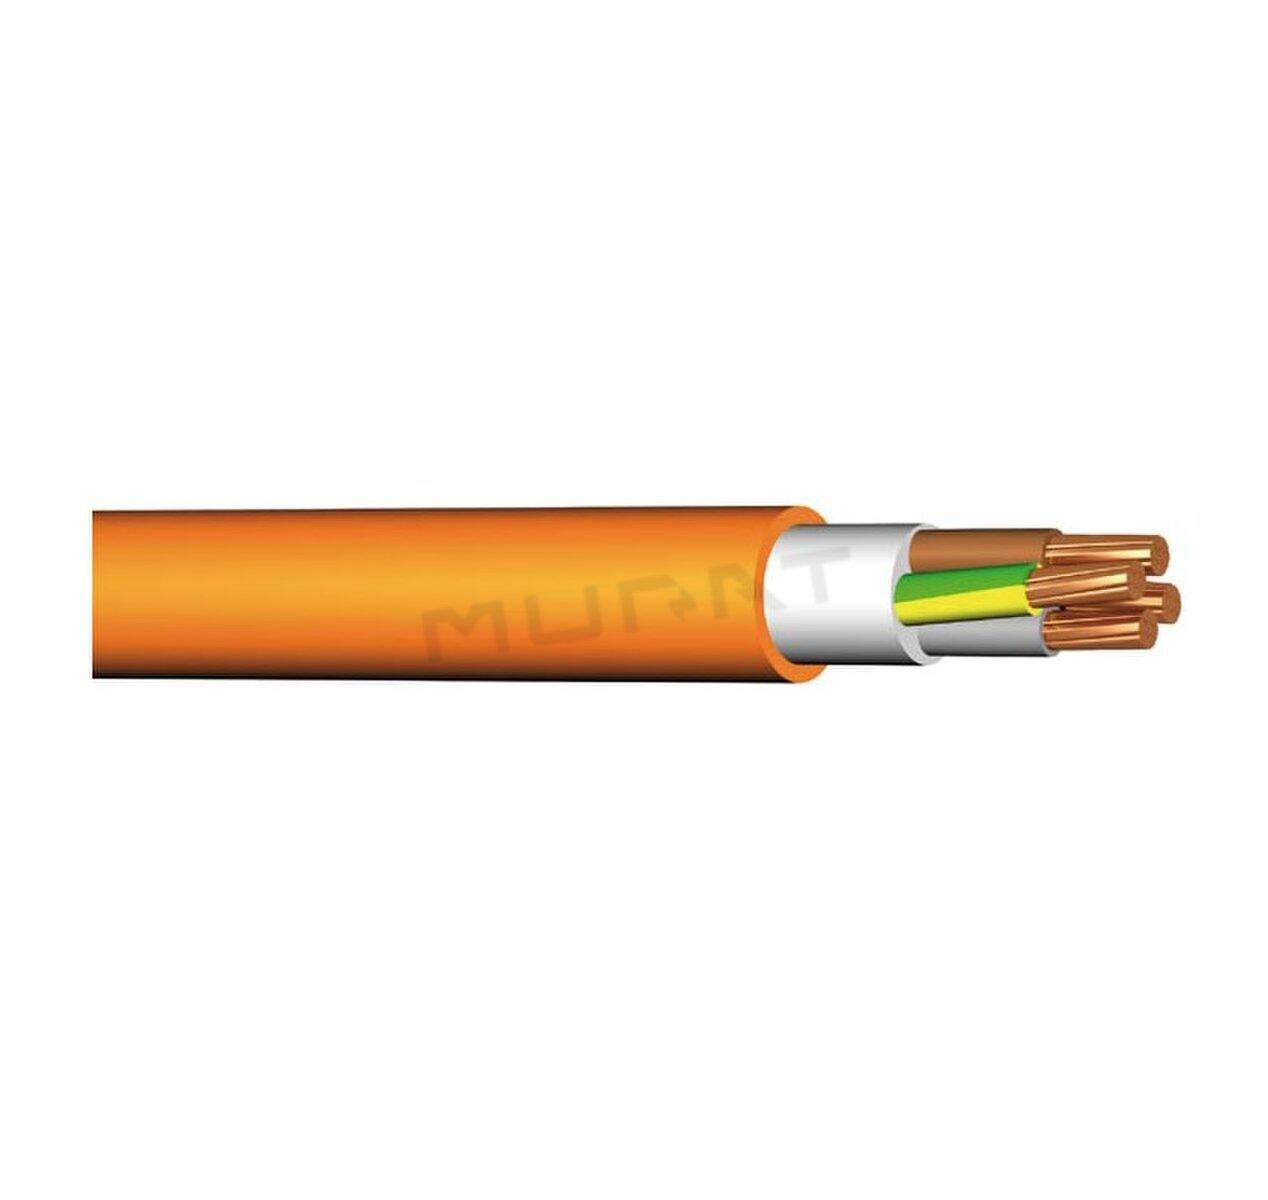 Kábel PRAFlaSafe X-J 3x1,5 mm2 RE B2ca s1d1a1